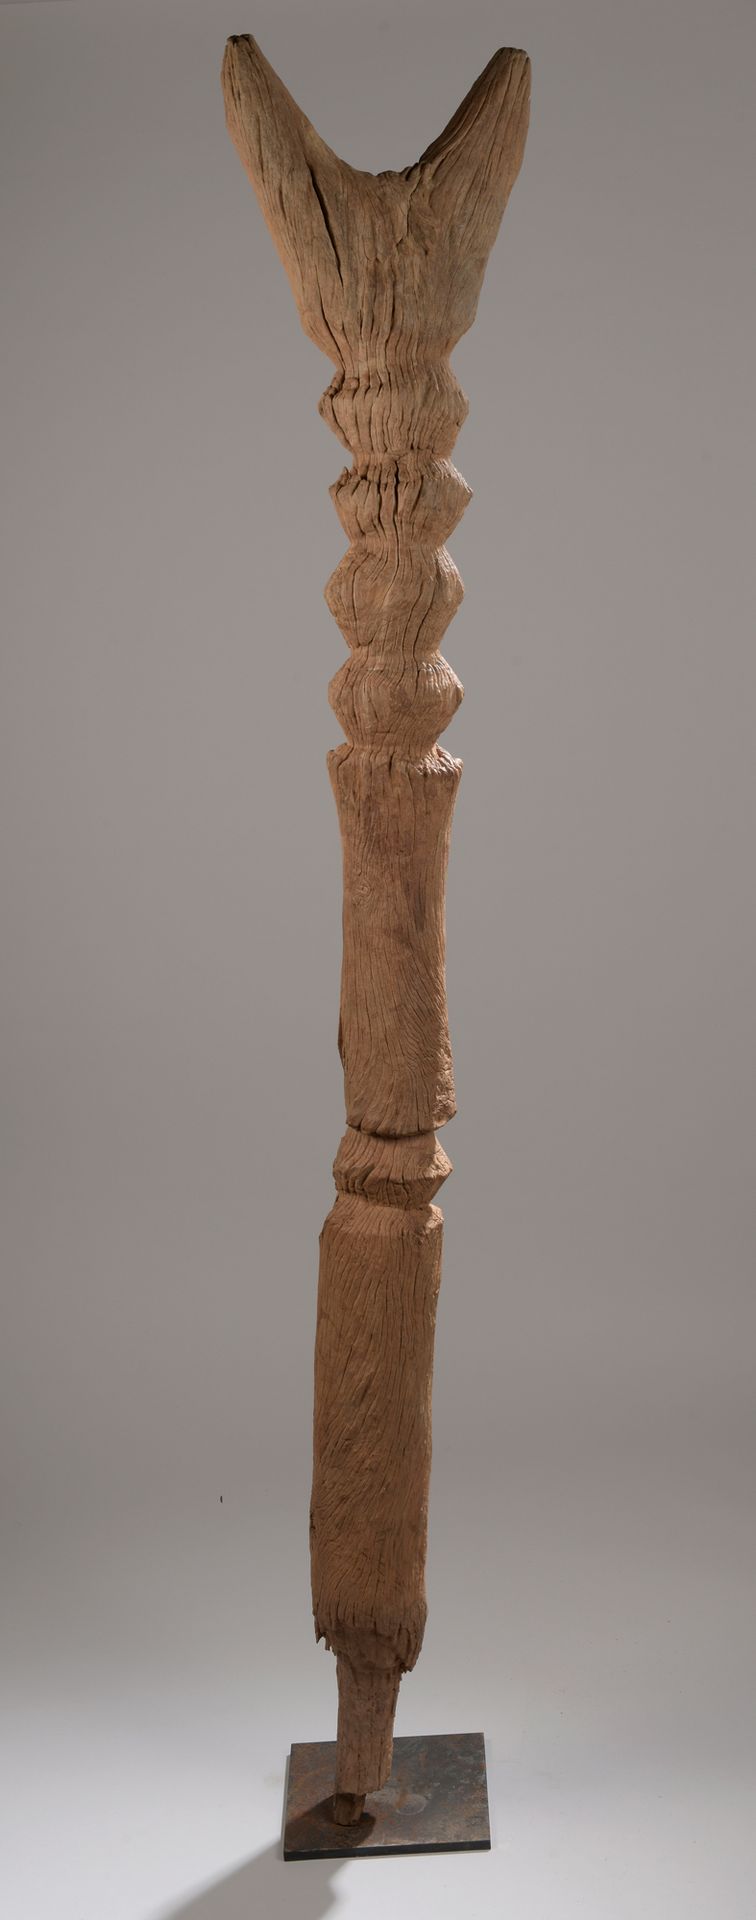 Null MOSSI POT, 布基纳法索

带有自然铜锈的木材。

H.168.5厘米

岗位标志着外面的暴露，在叉子下刻有线圈形式的连续元素。